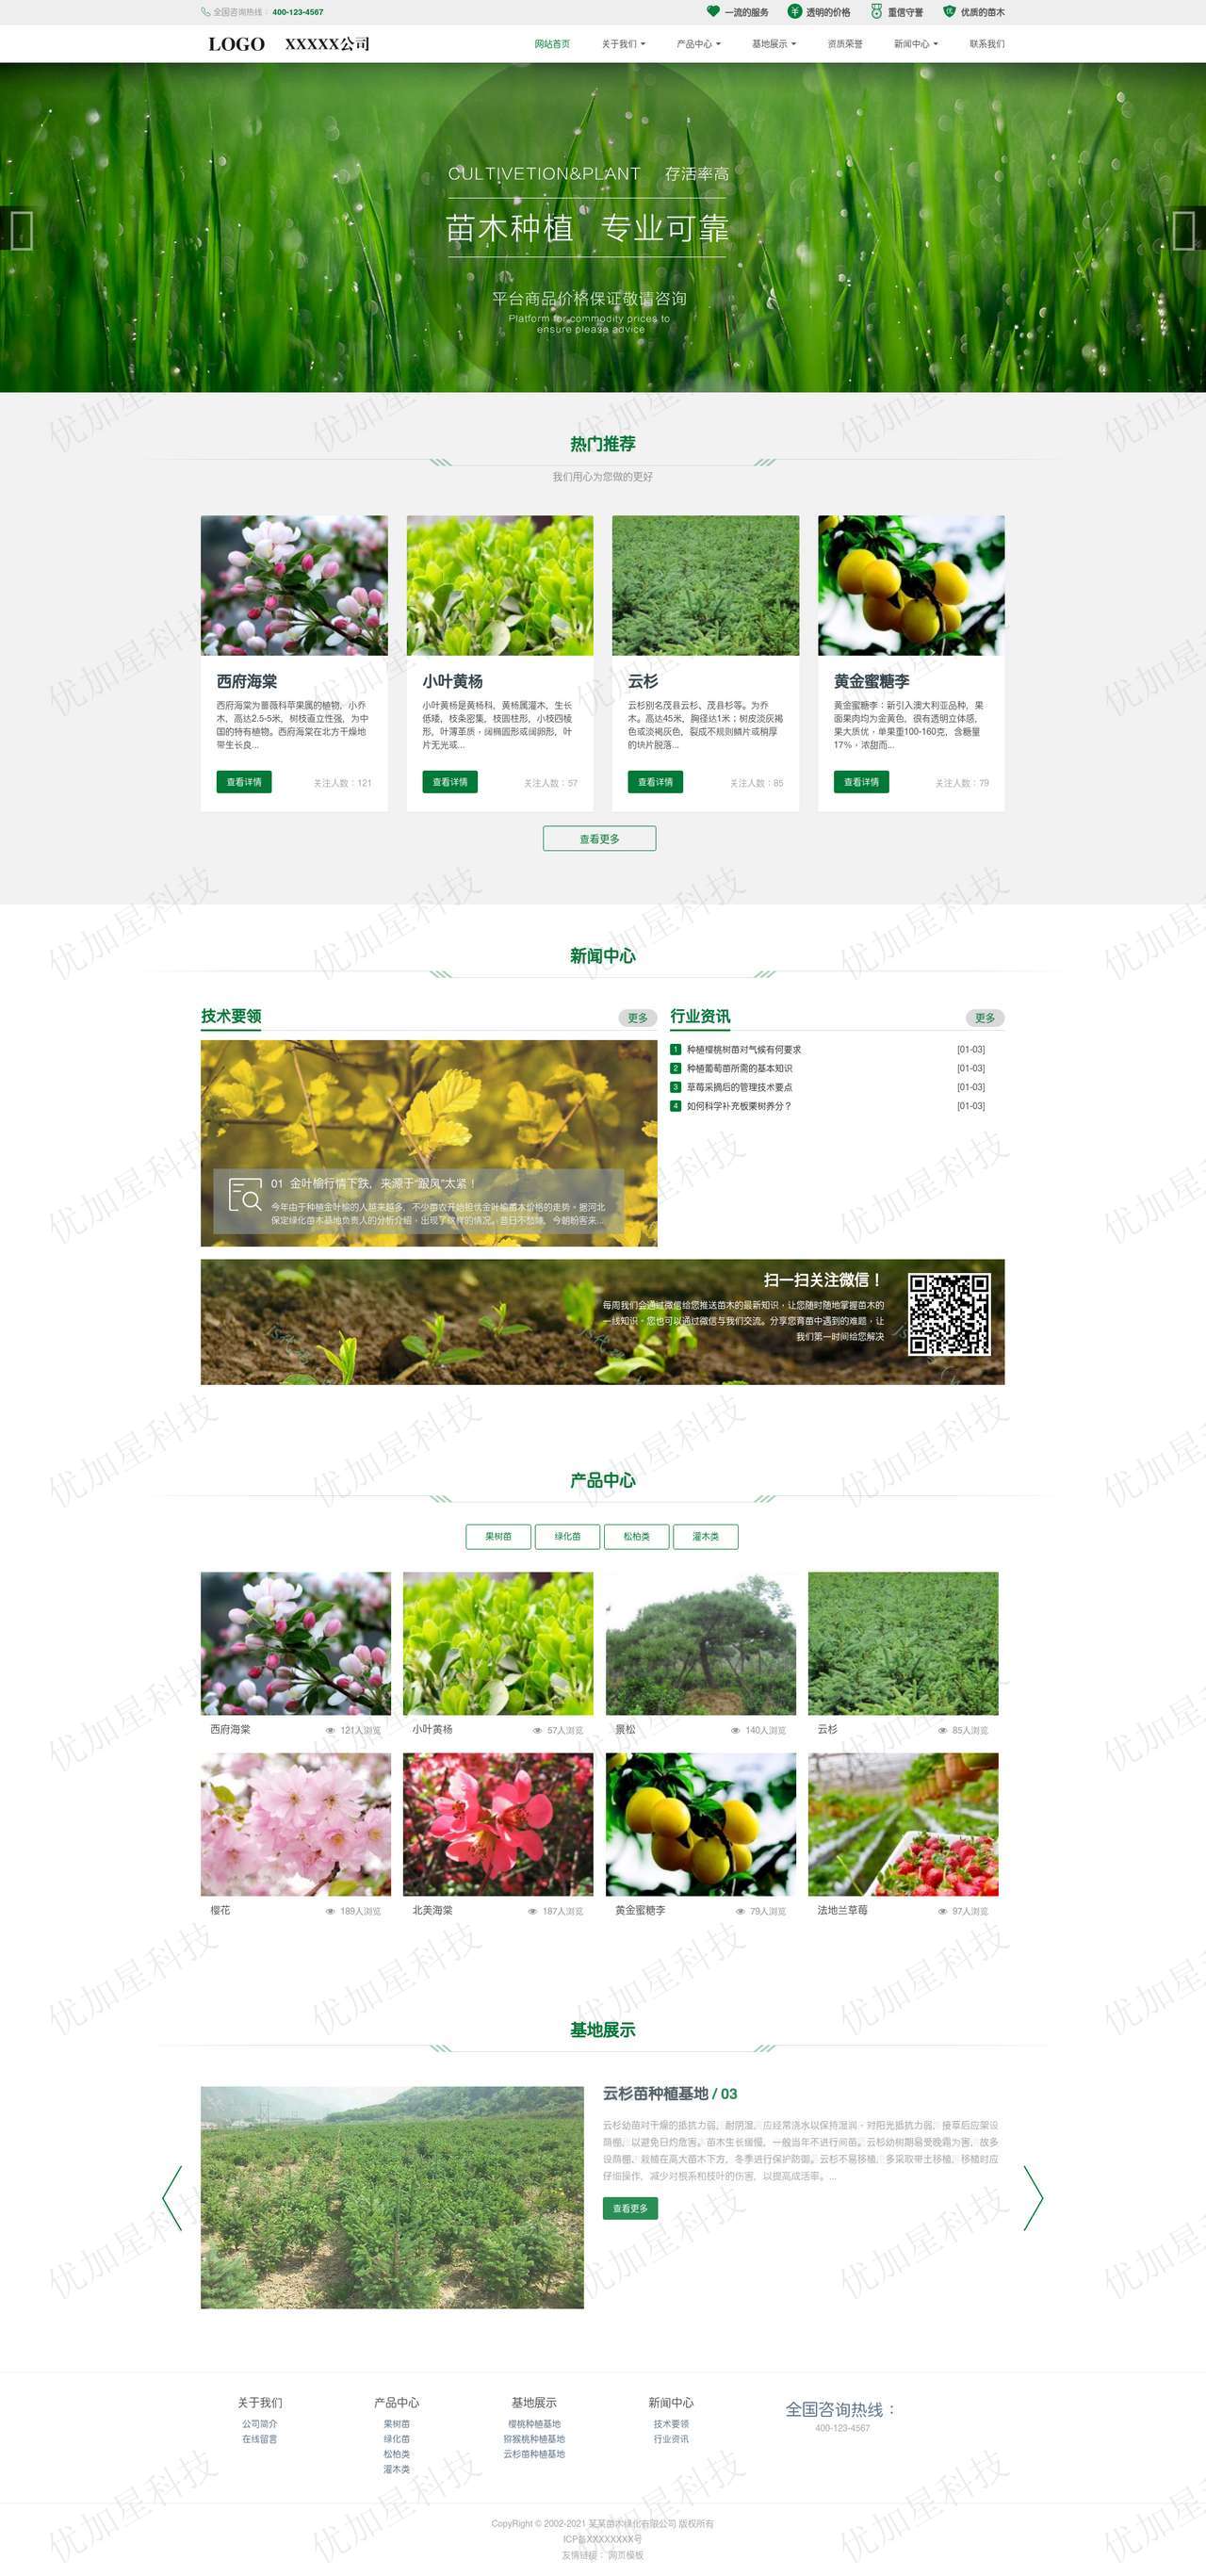 html5绿化种植公司网站模板下载_优加星网络科技